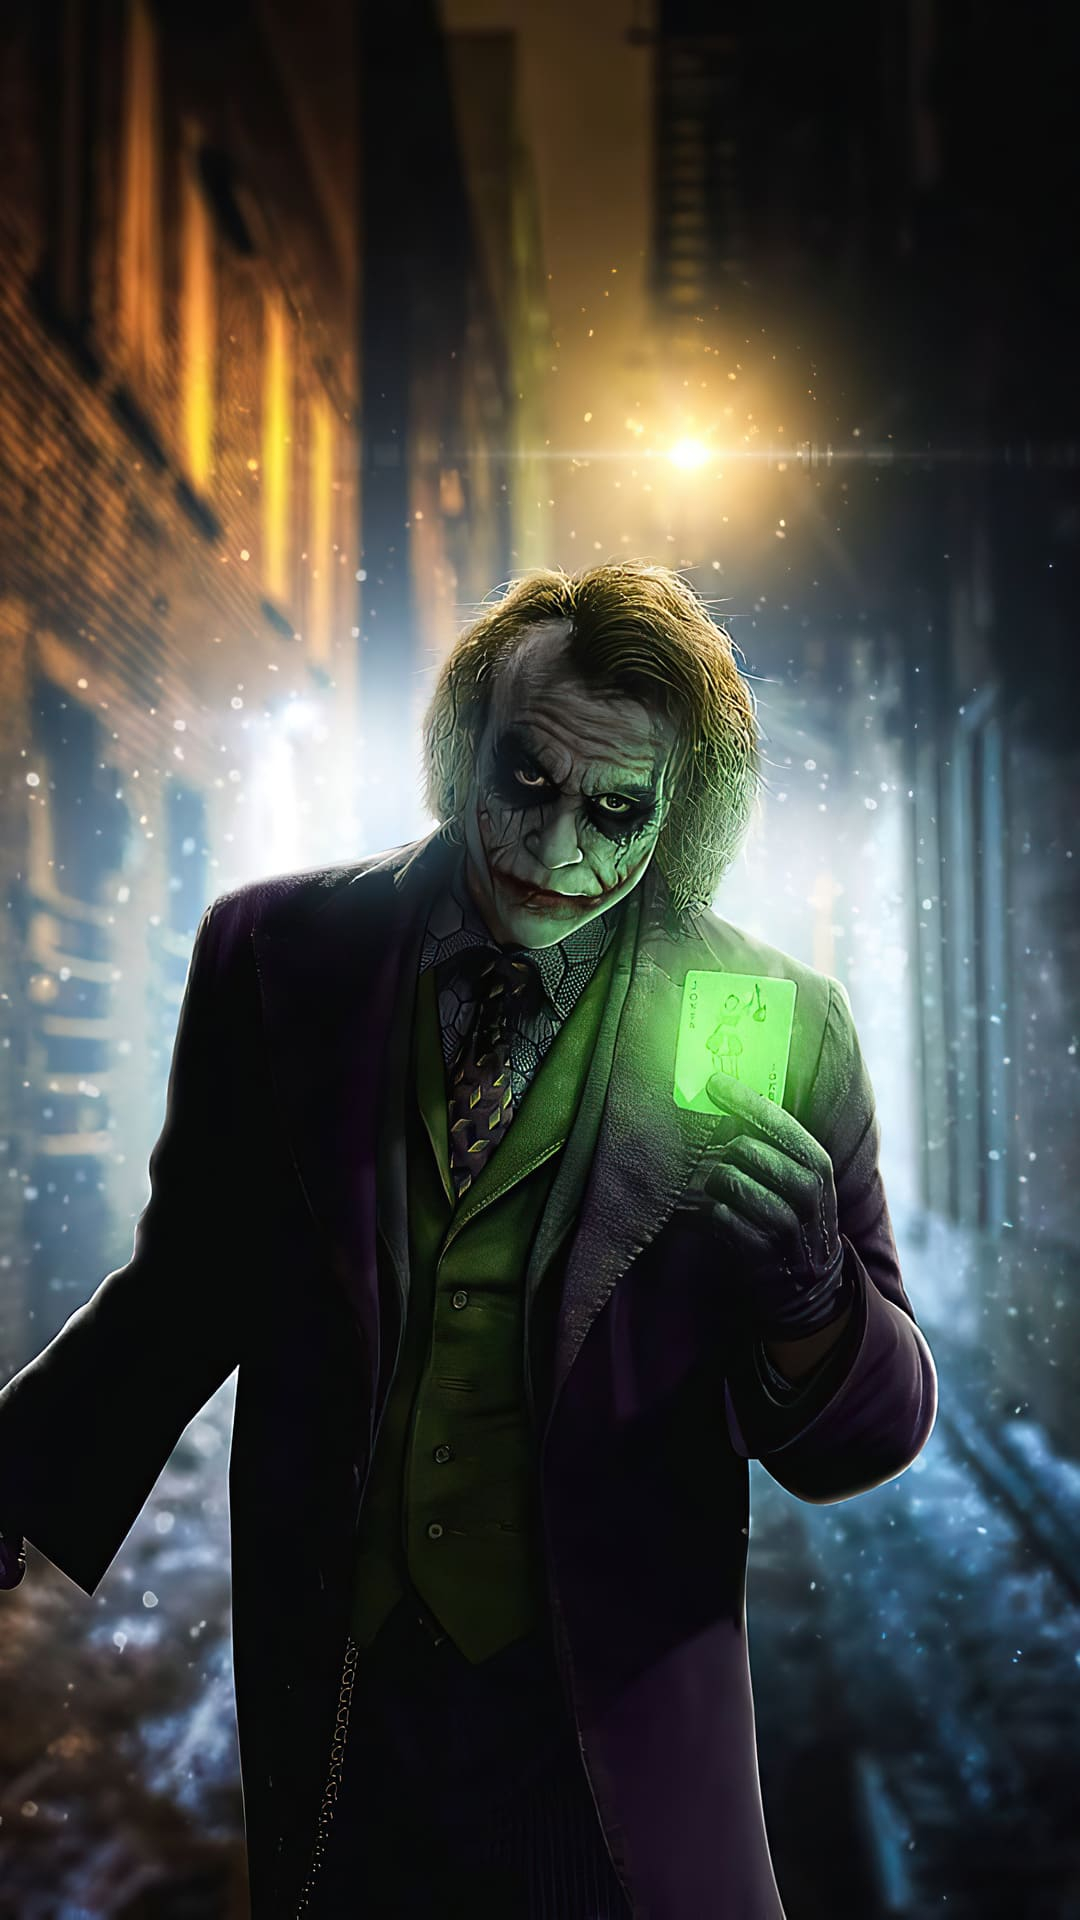 1080x1920 Cool Joker Wallpapers Top Best Cool Joker Backgrounds